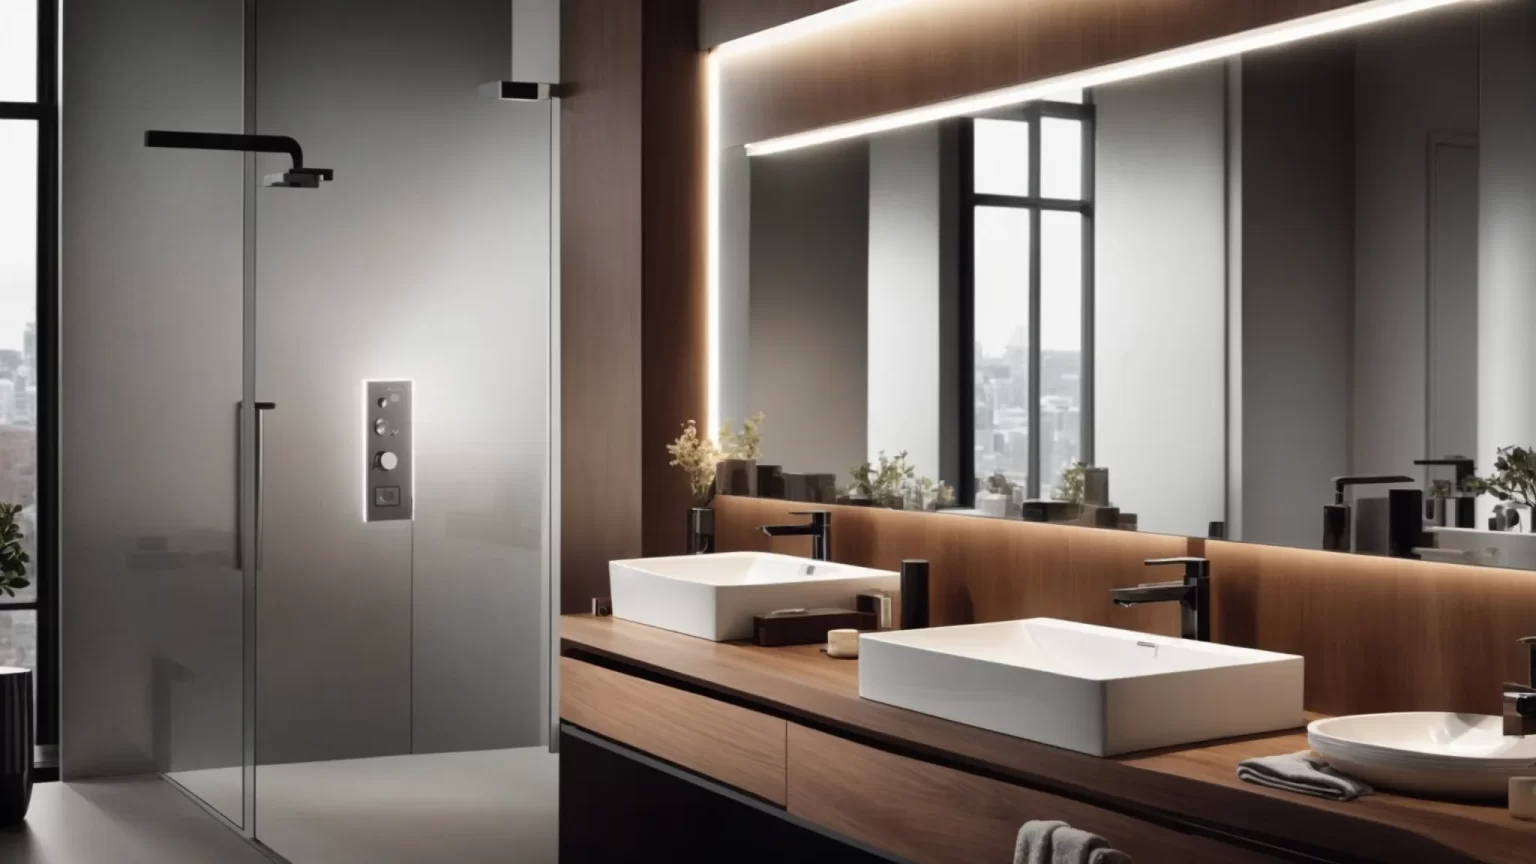 High-tech bathroom renovation features trending in Barrie